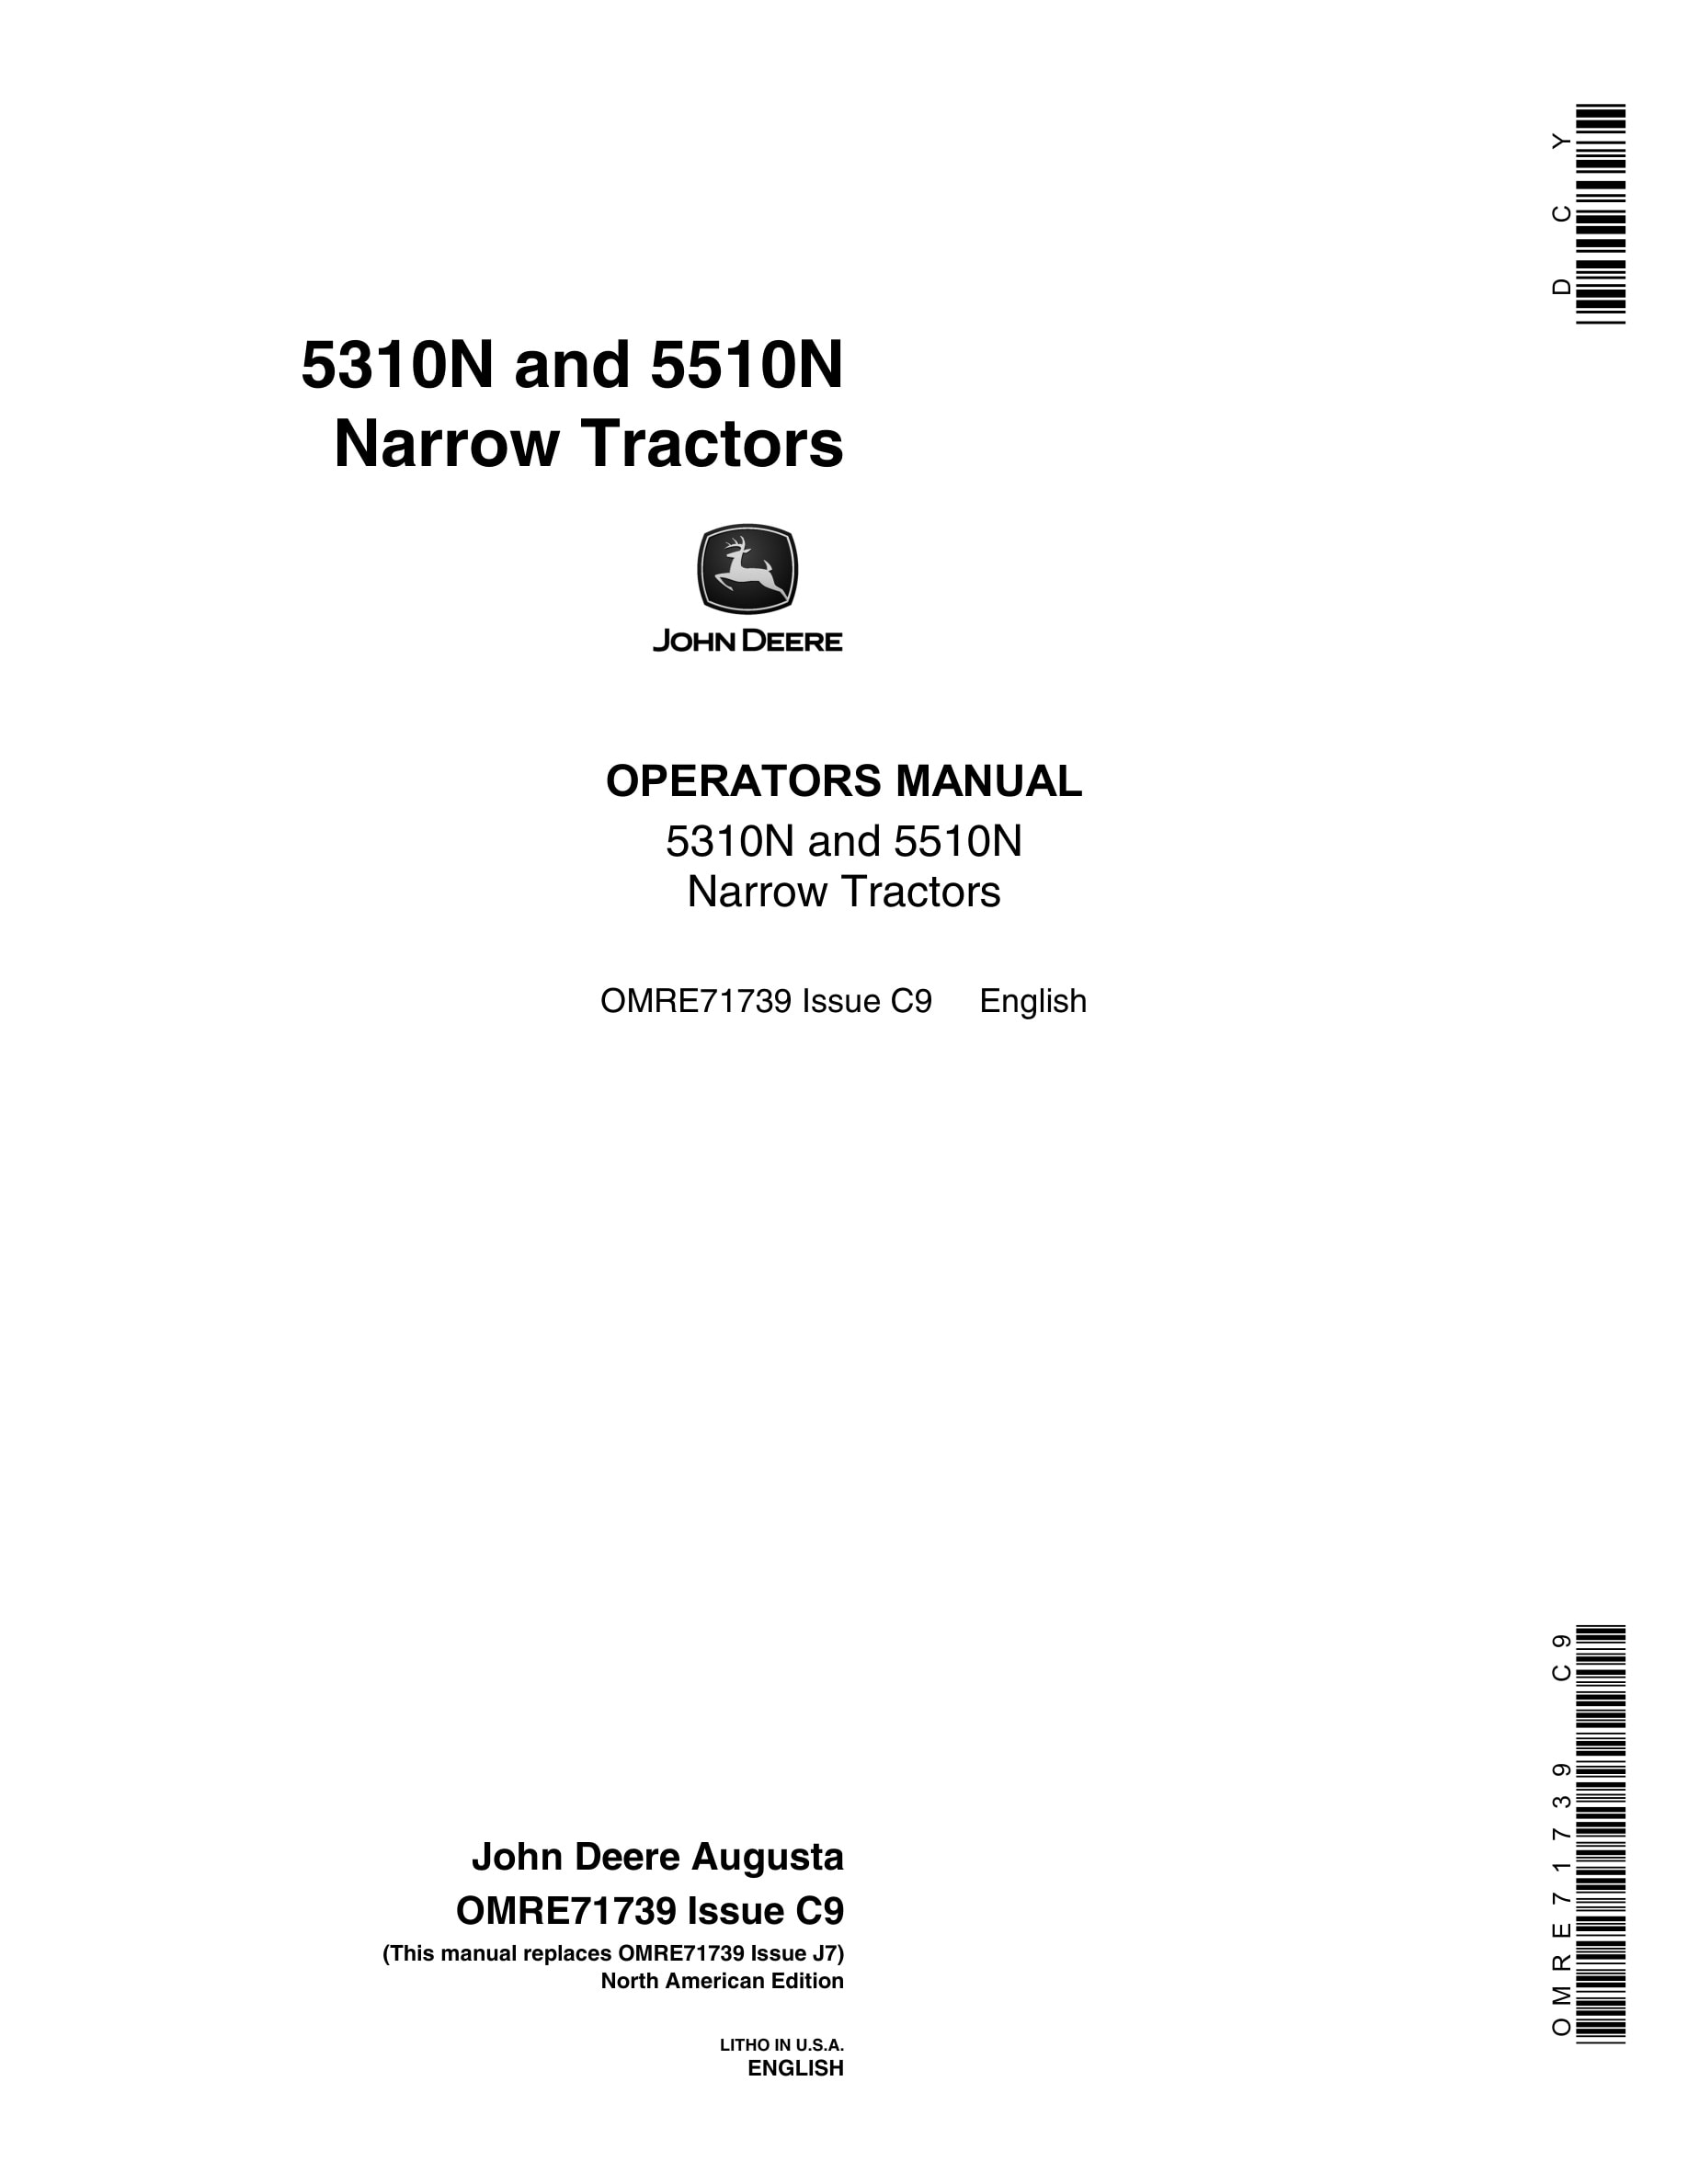 John Deere 5310N and 5510N Tractor Operator Manual OMRE71739-1